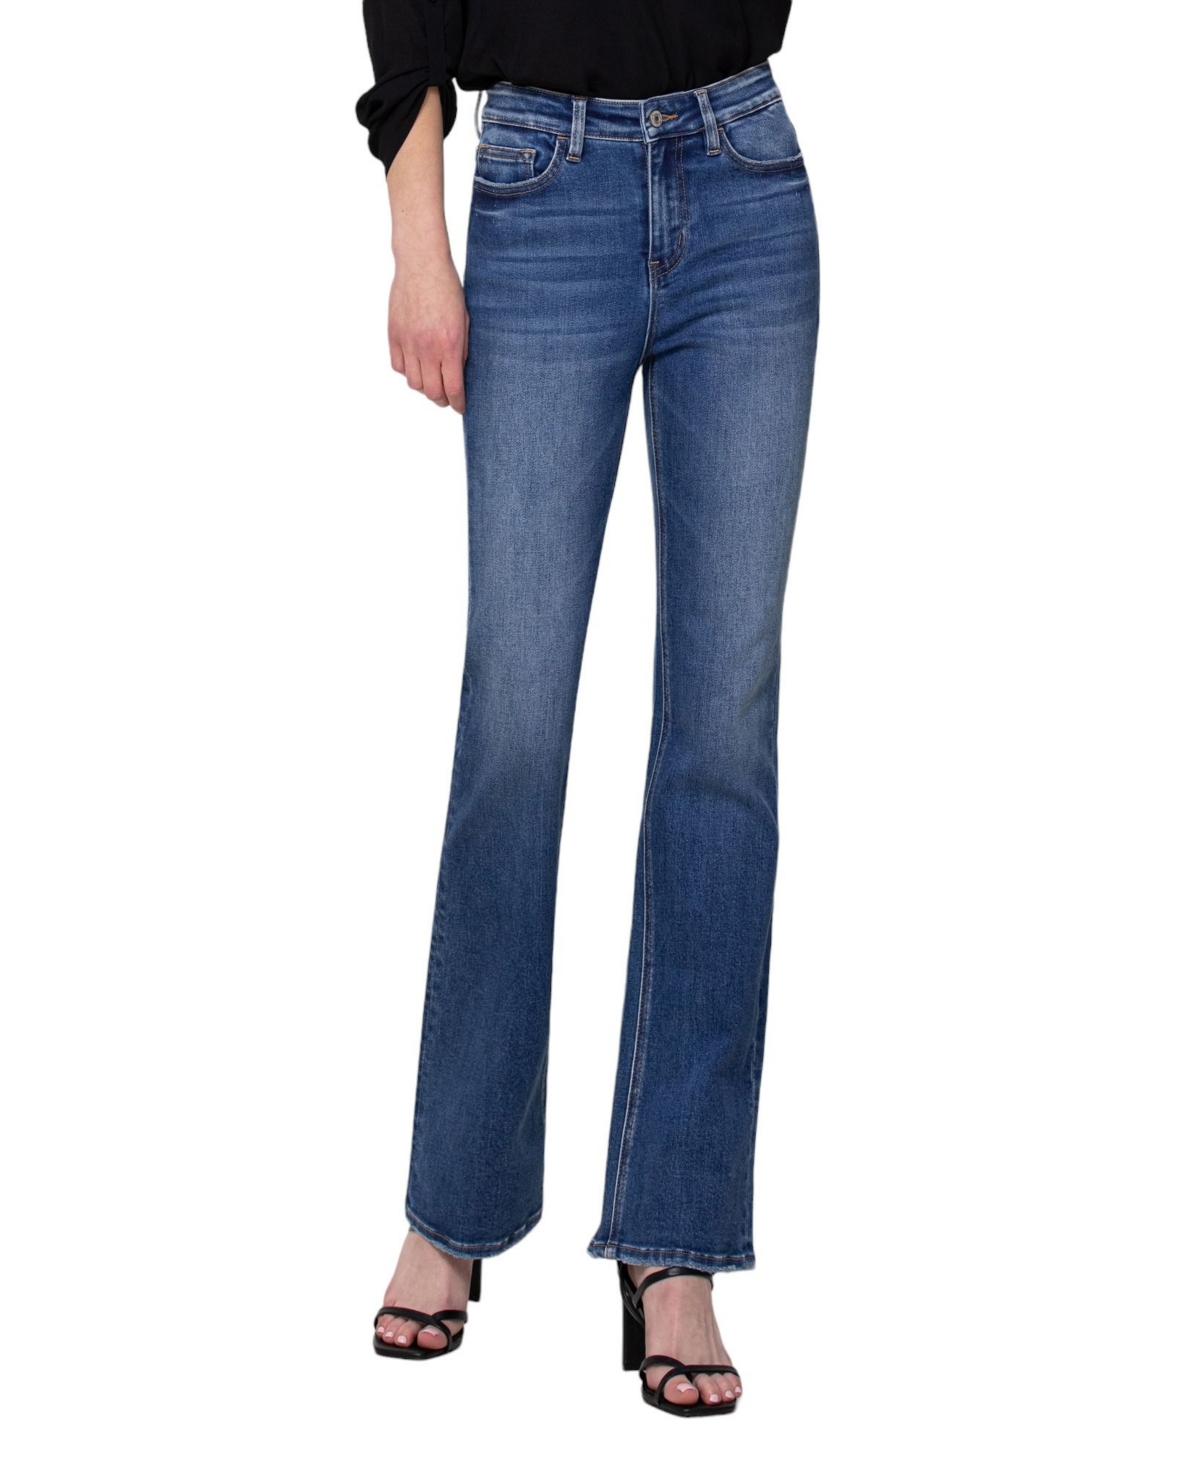 Women's High Rise Stretch Slim Bootcut Jeans - Walking on sunshine blue